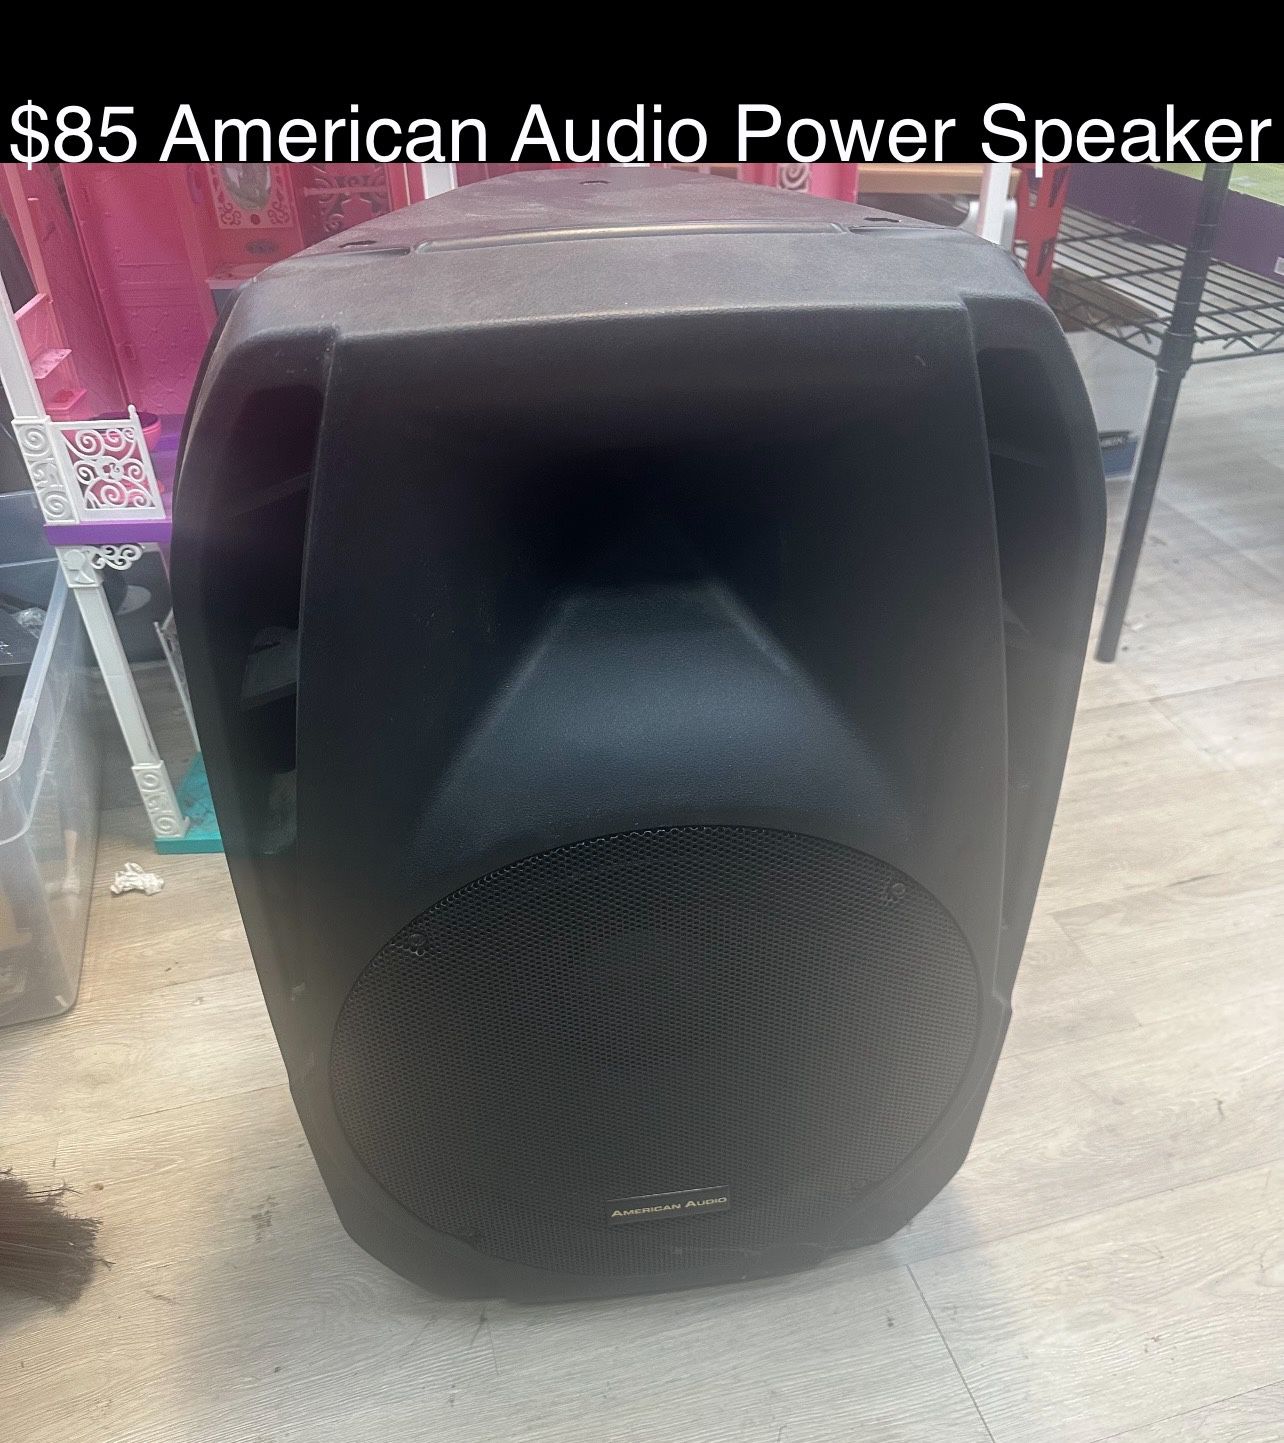 American Audio 15" inch powered speaker